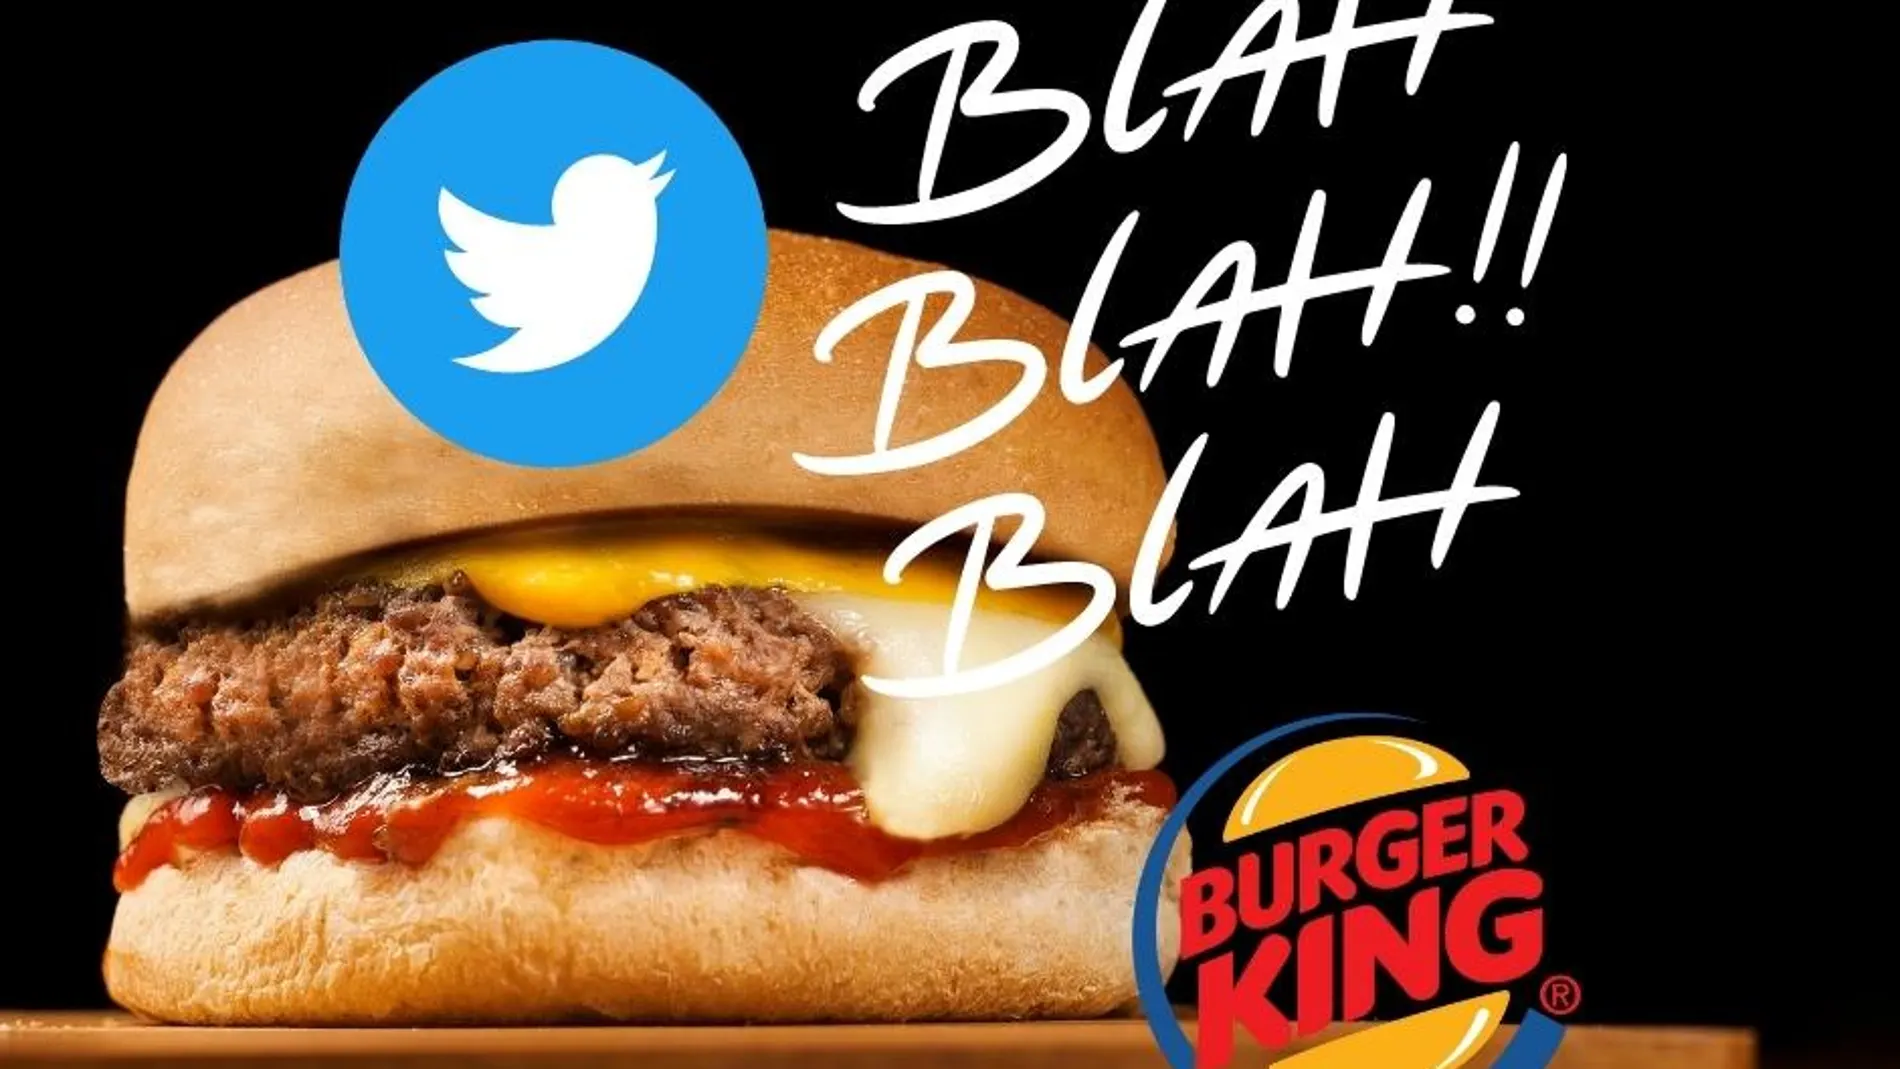 El anuncio vegano de Burger King que ha incendiado Twitter.